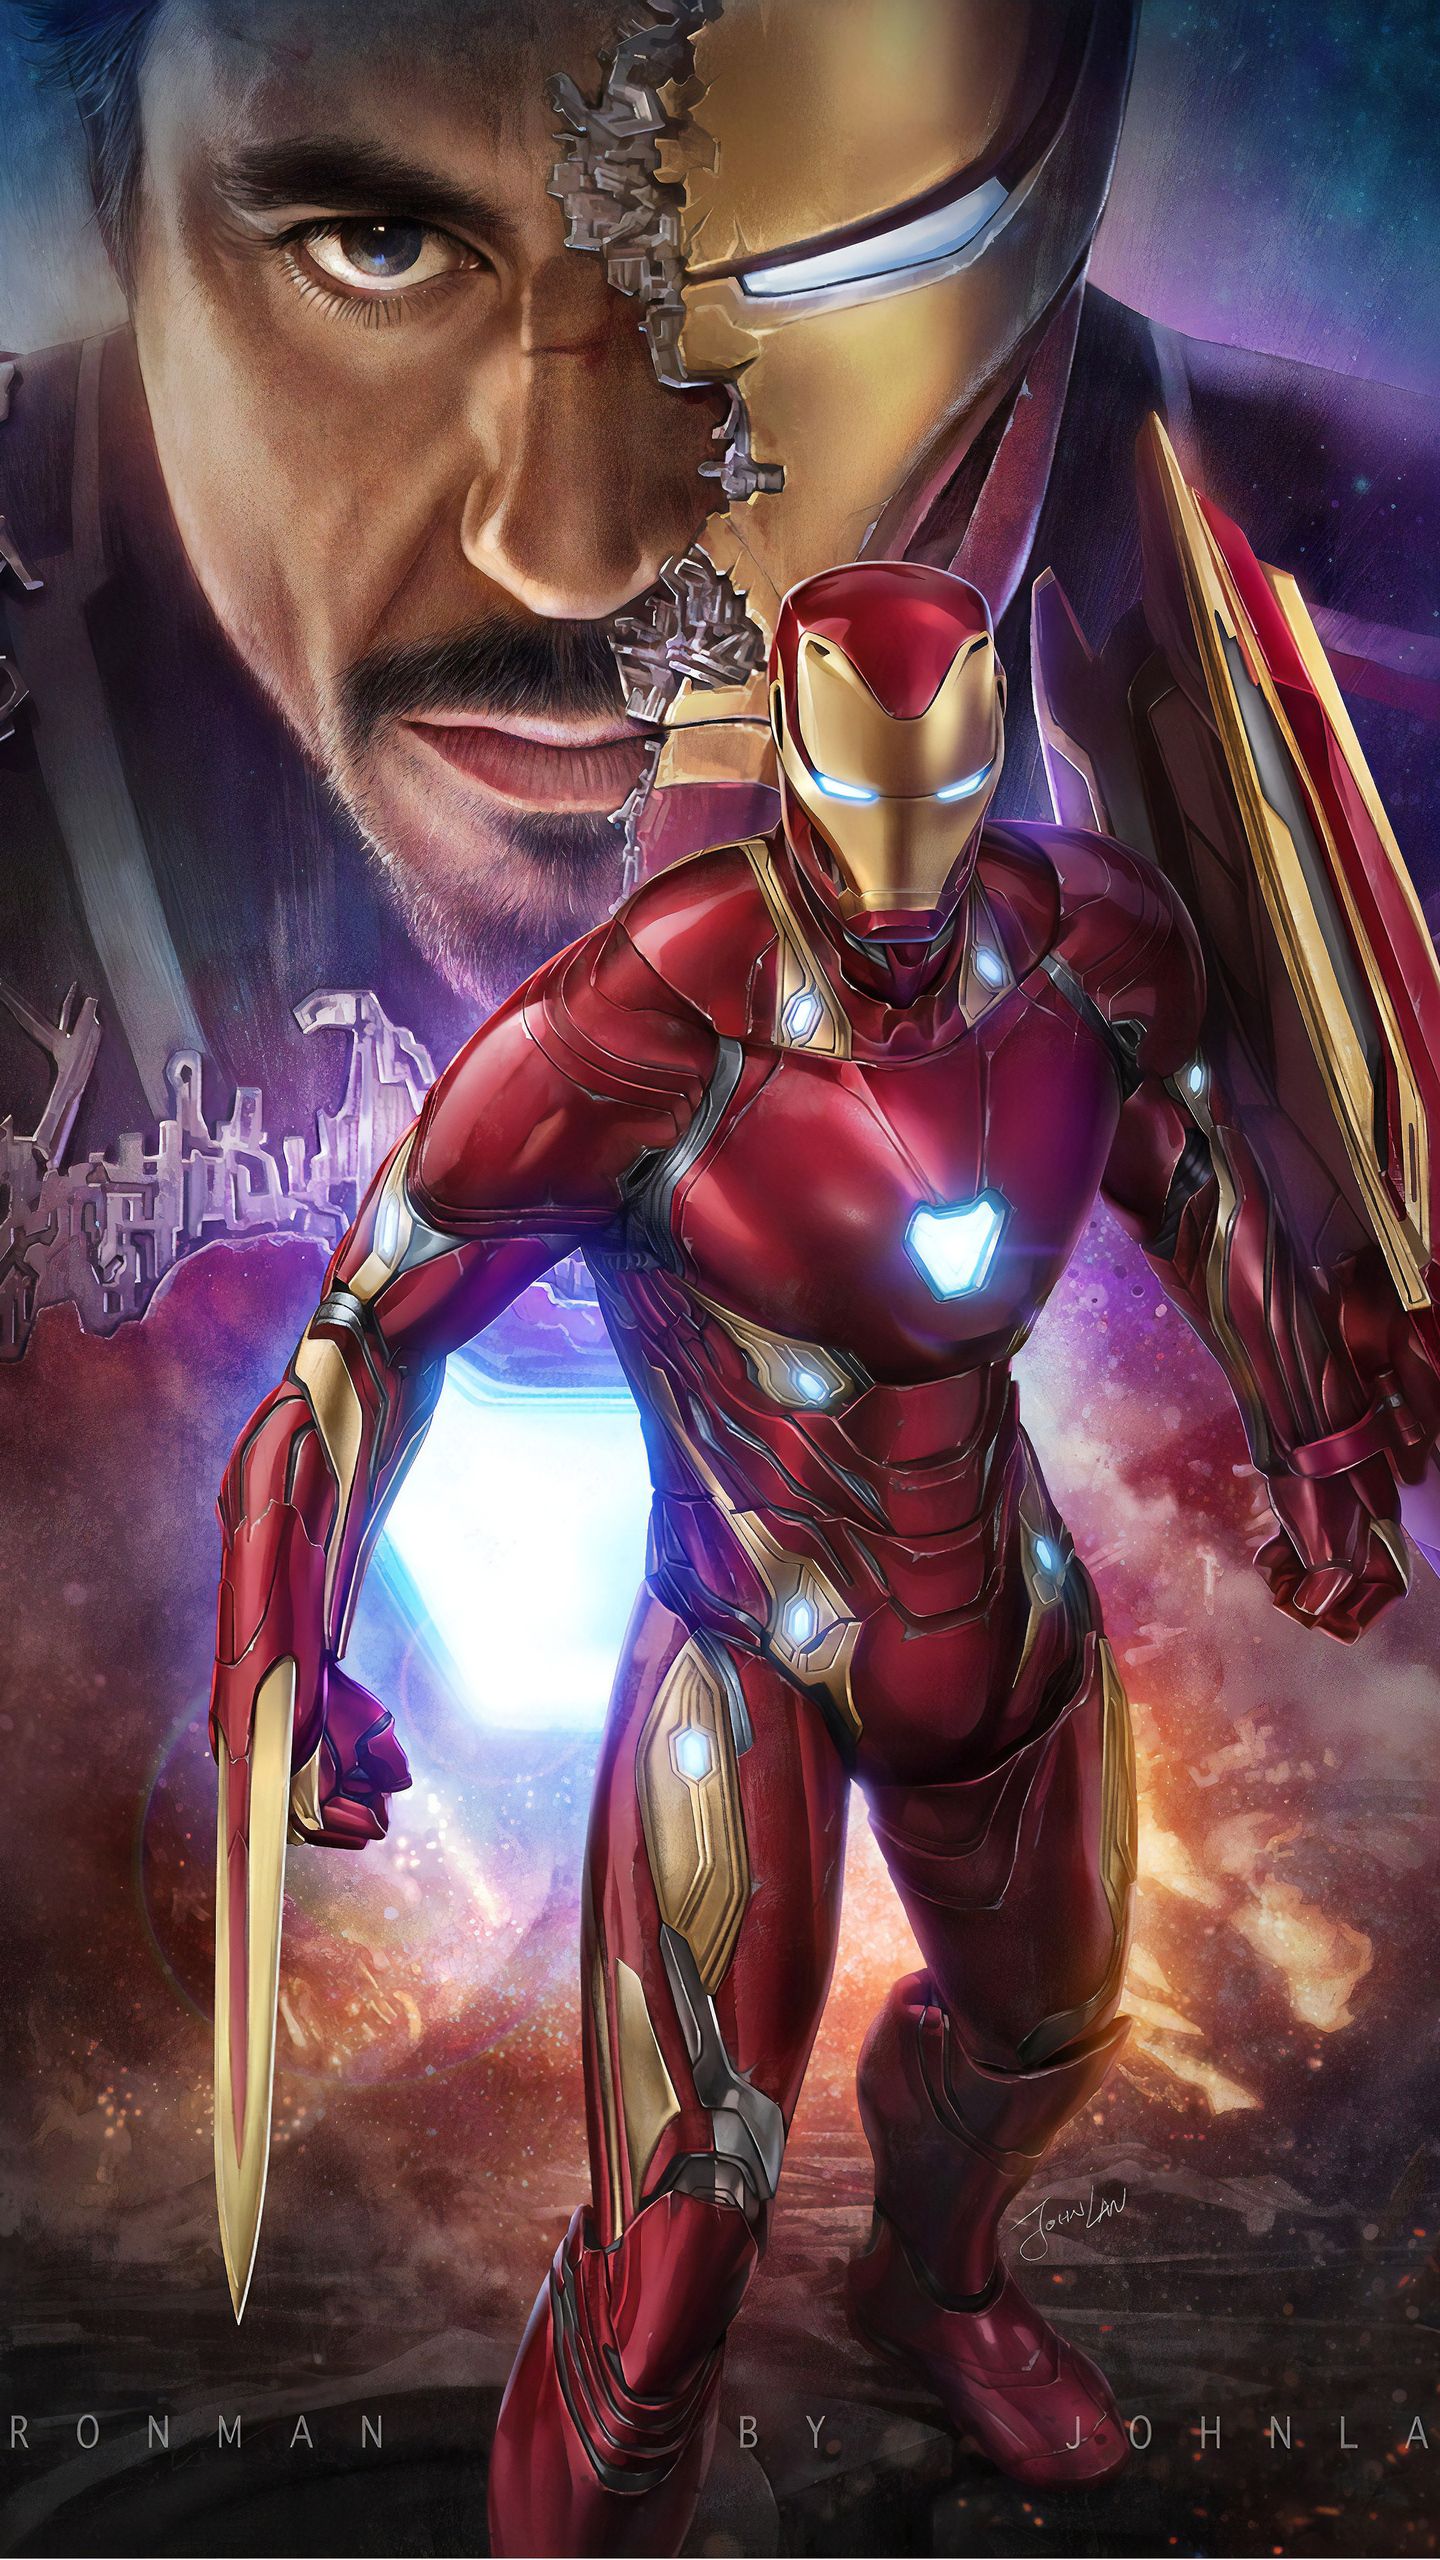 Tony Stark Iron Man 4k Samsung Galaxy S S7 , Google Pixel XL , Nexus 6P , LG G5 HD 4k Wallpaper, Image, Background, Photo and Picture